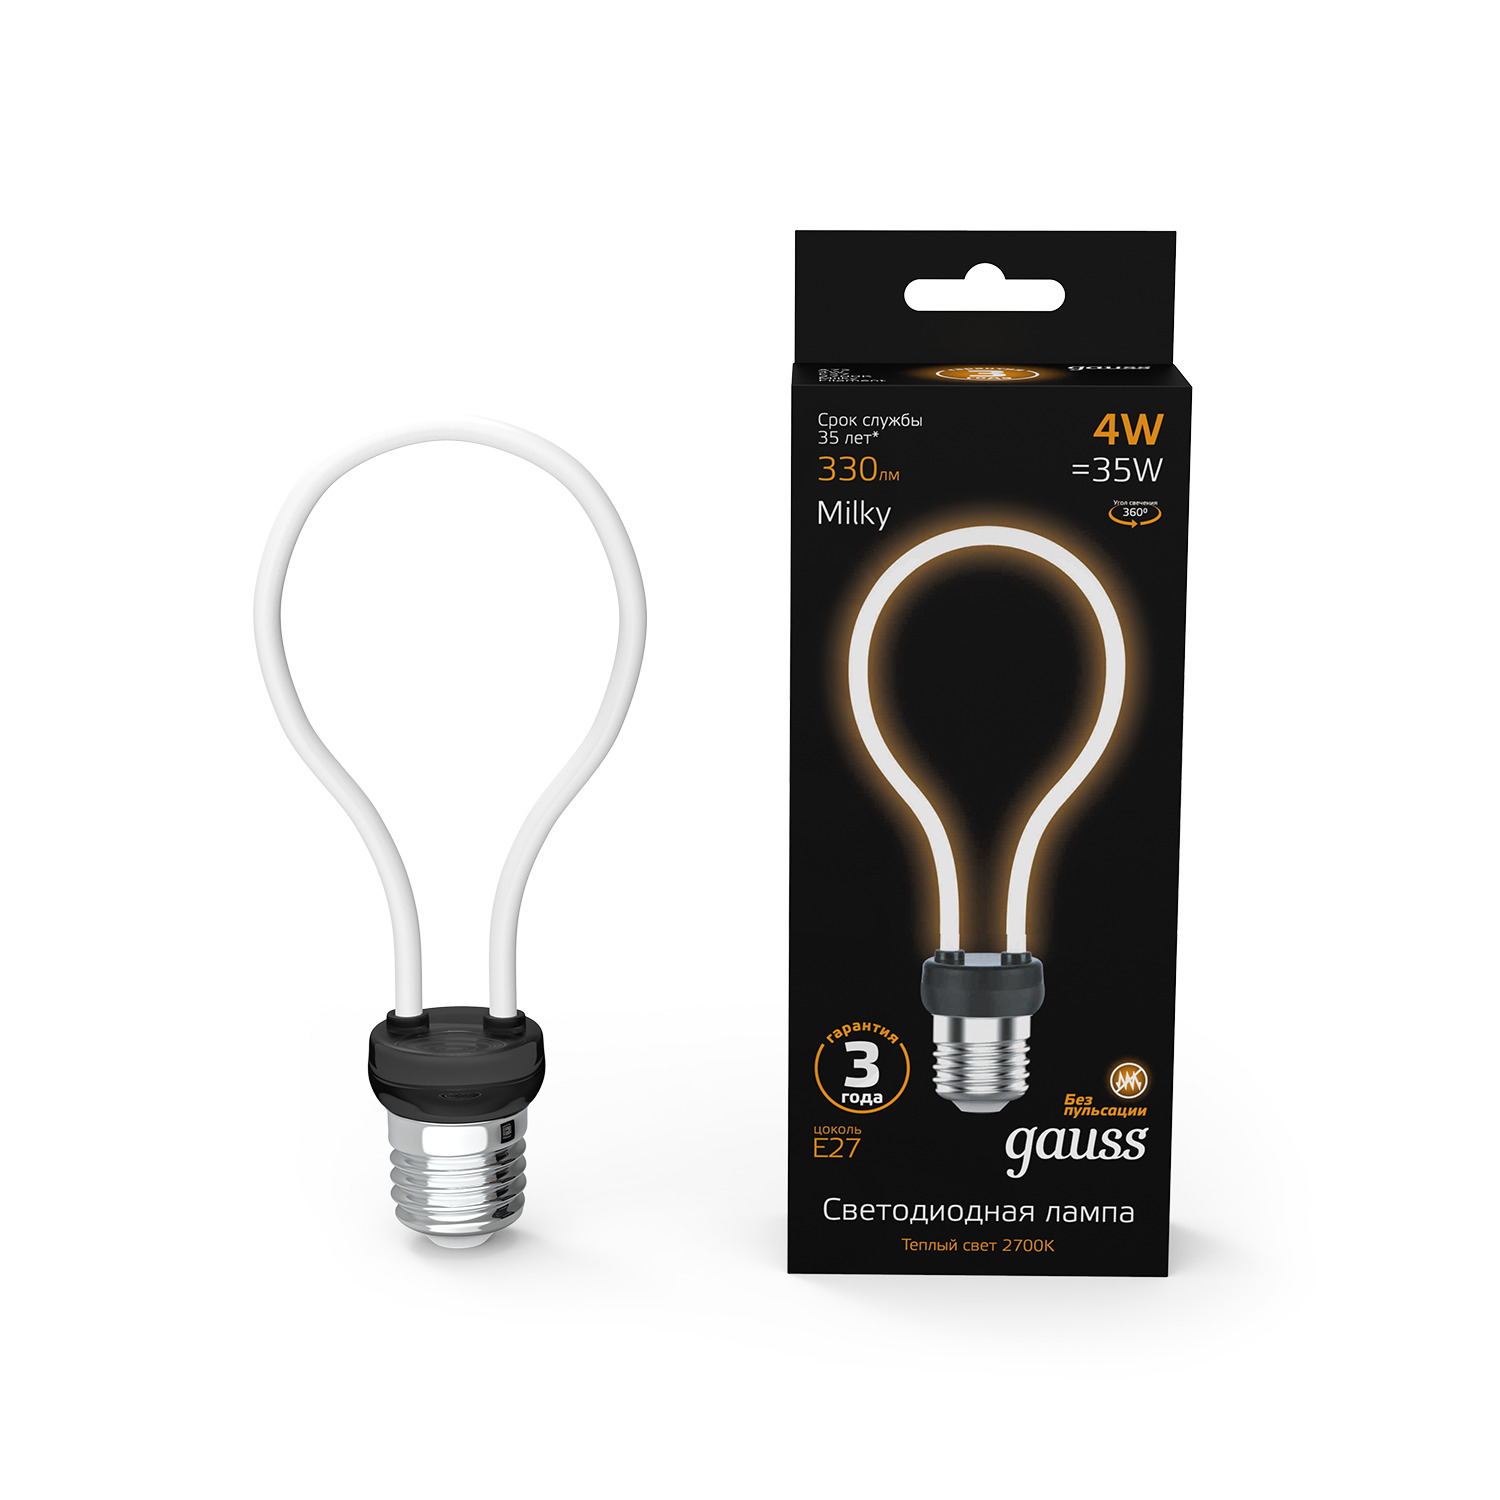 Лампа Gauss LED Filament Bulbless A72 Milky E27 4W 330 Лм 2700K 72x160мм